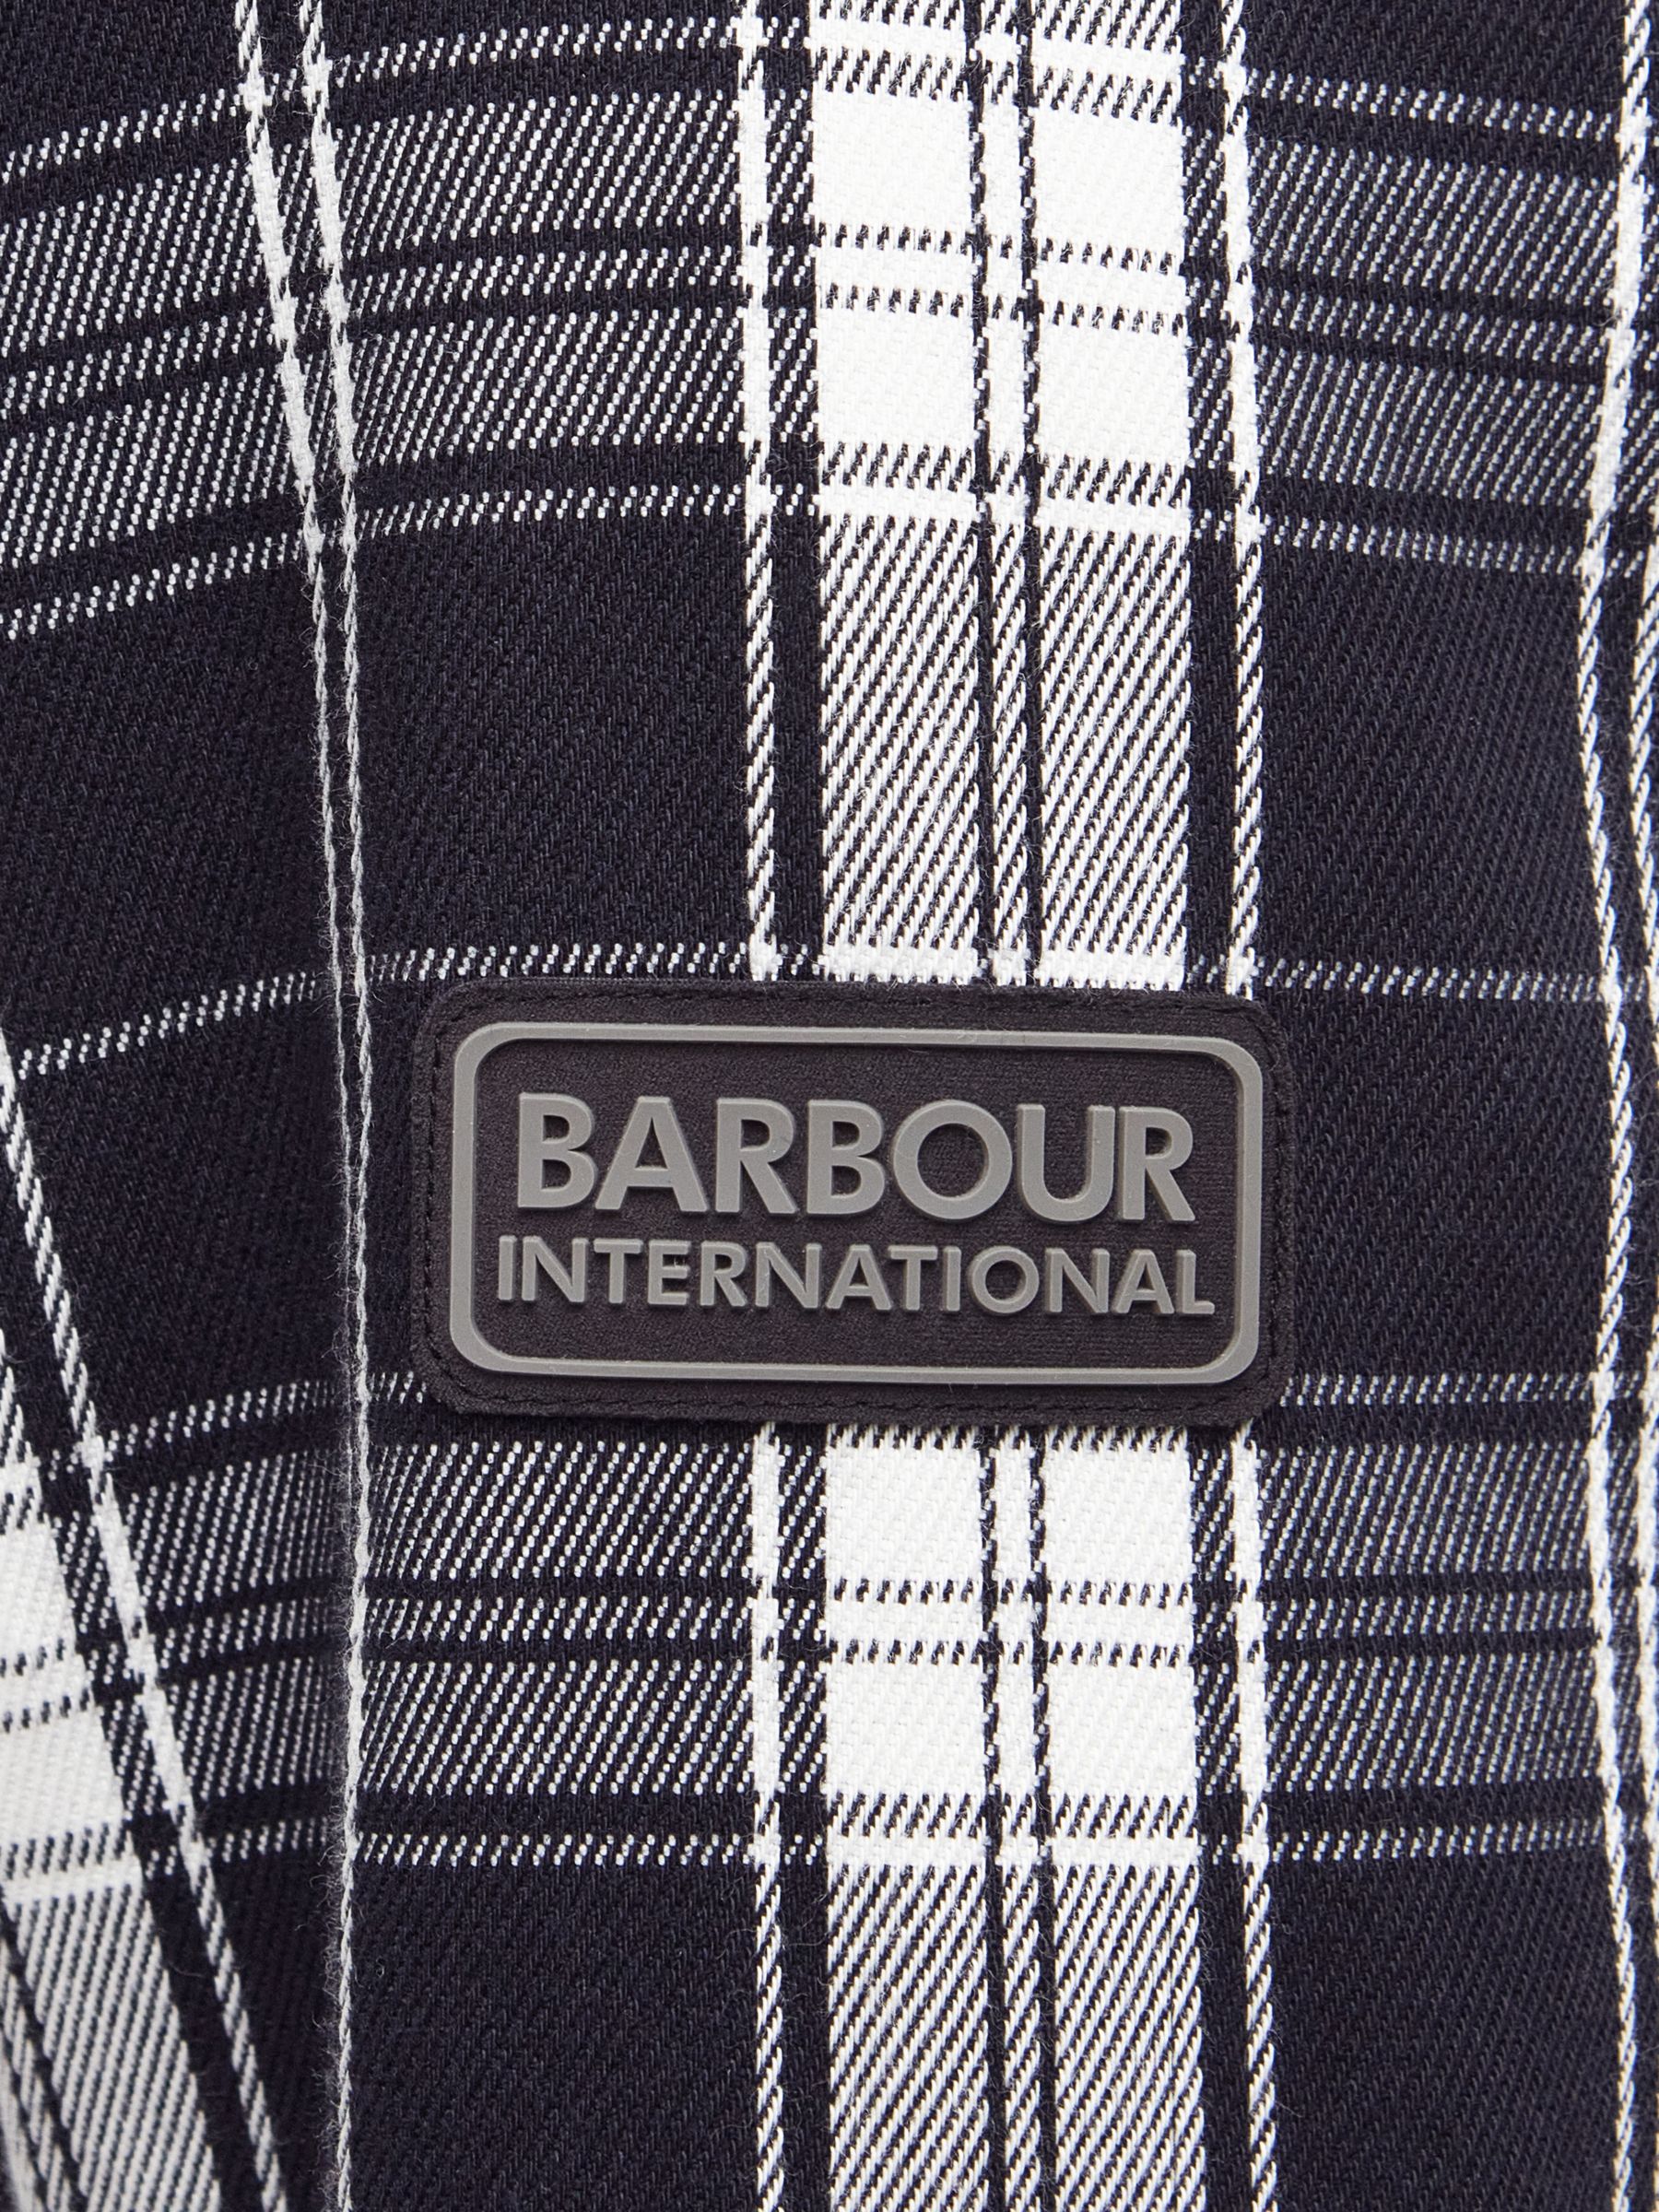 Barbour International Diode Overshirt, Black/White, XL